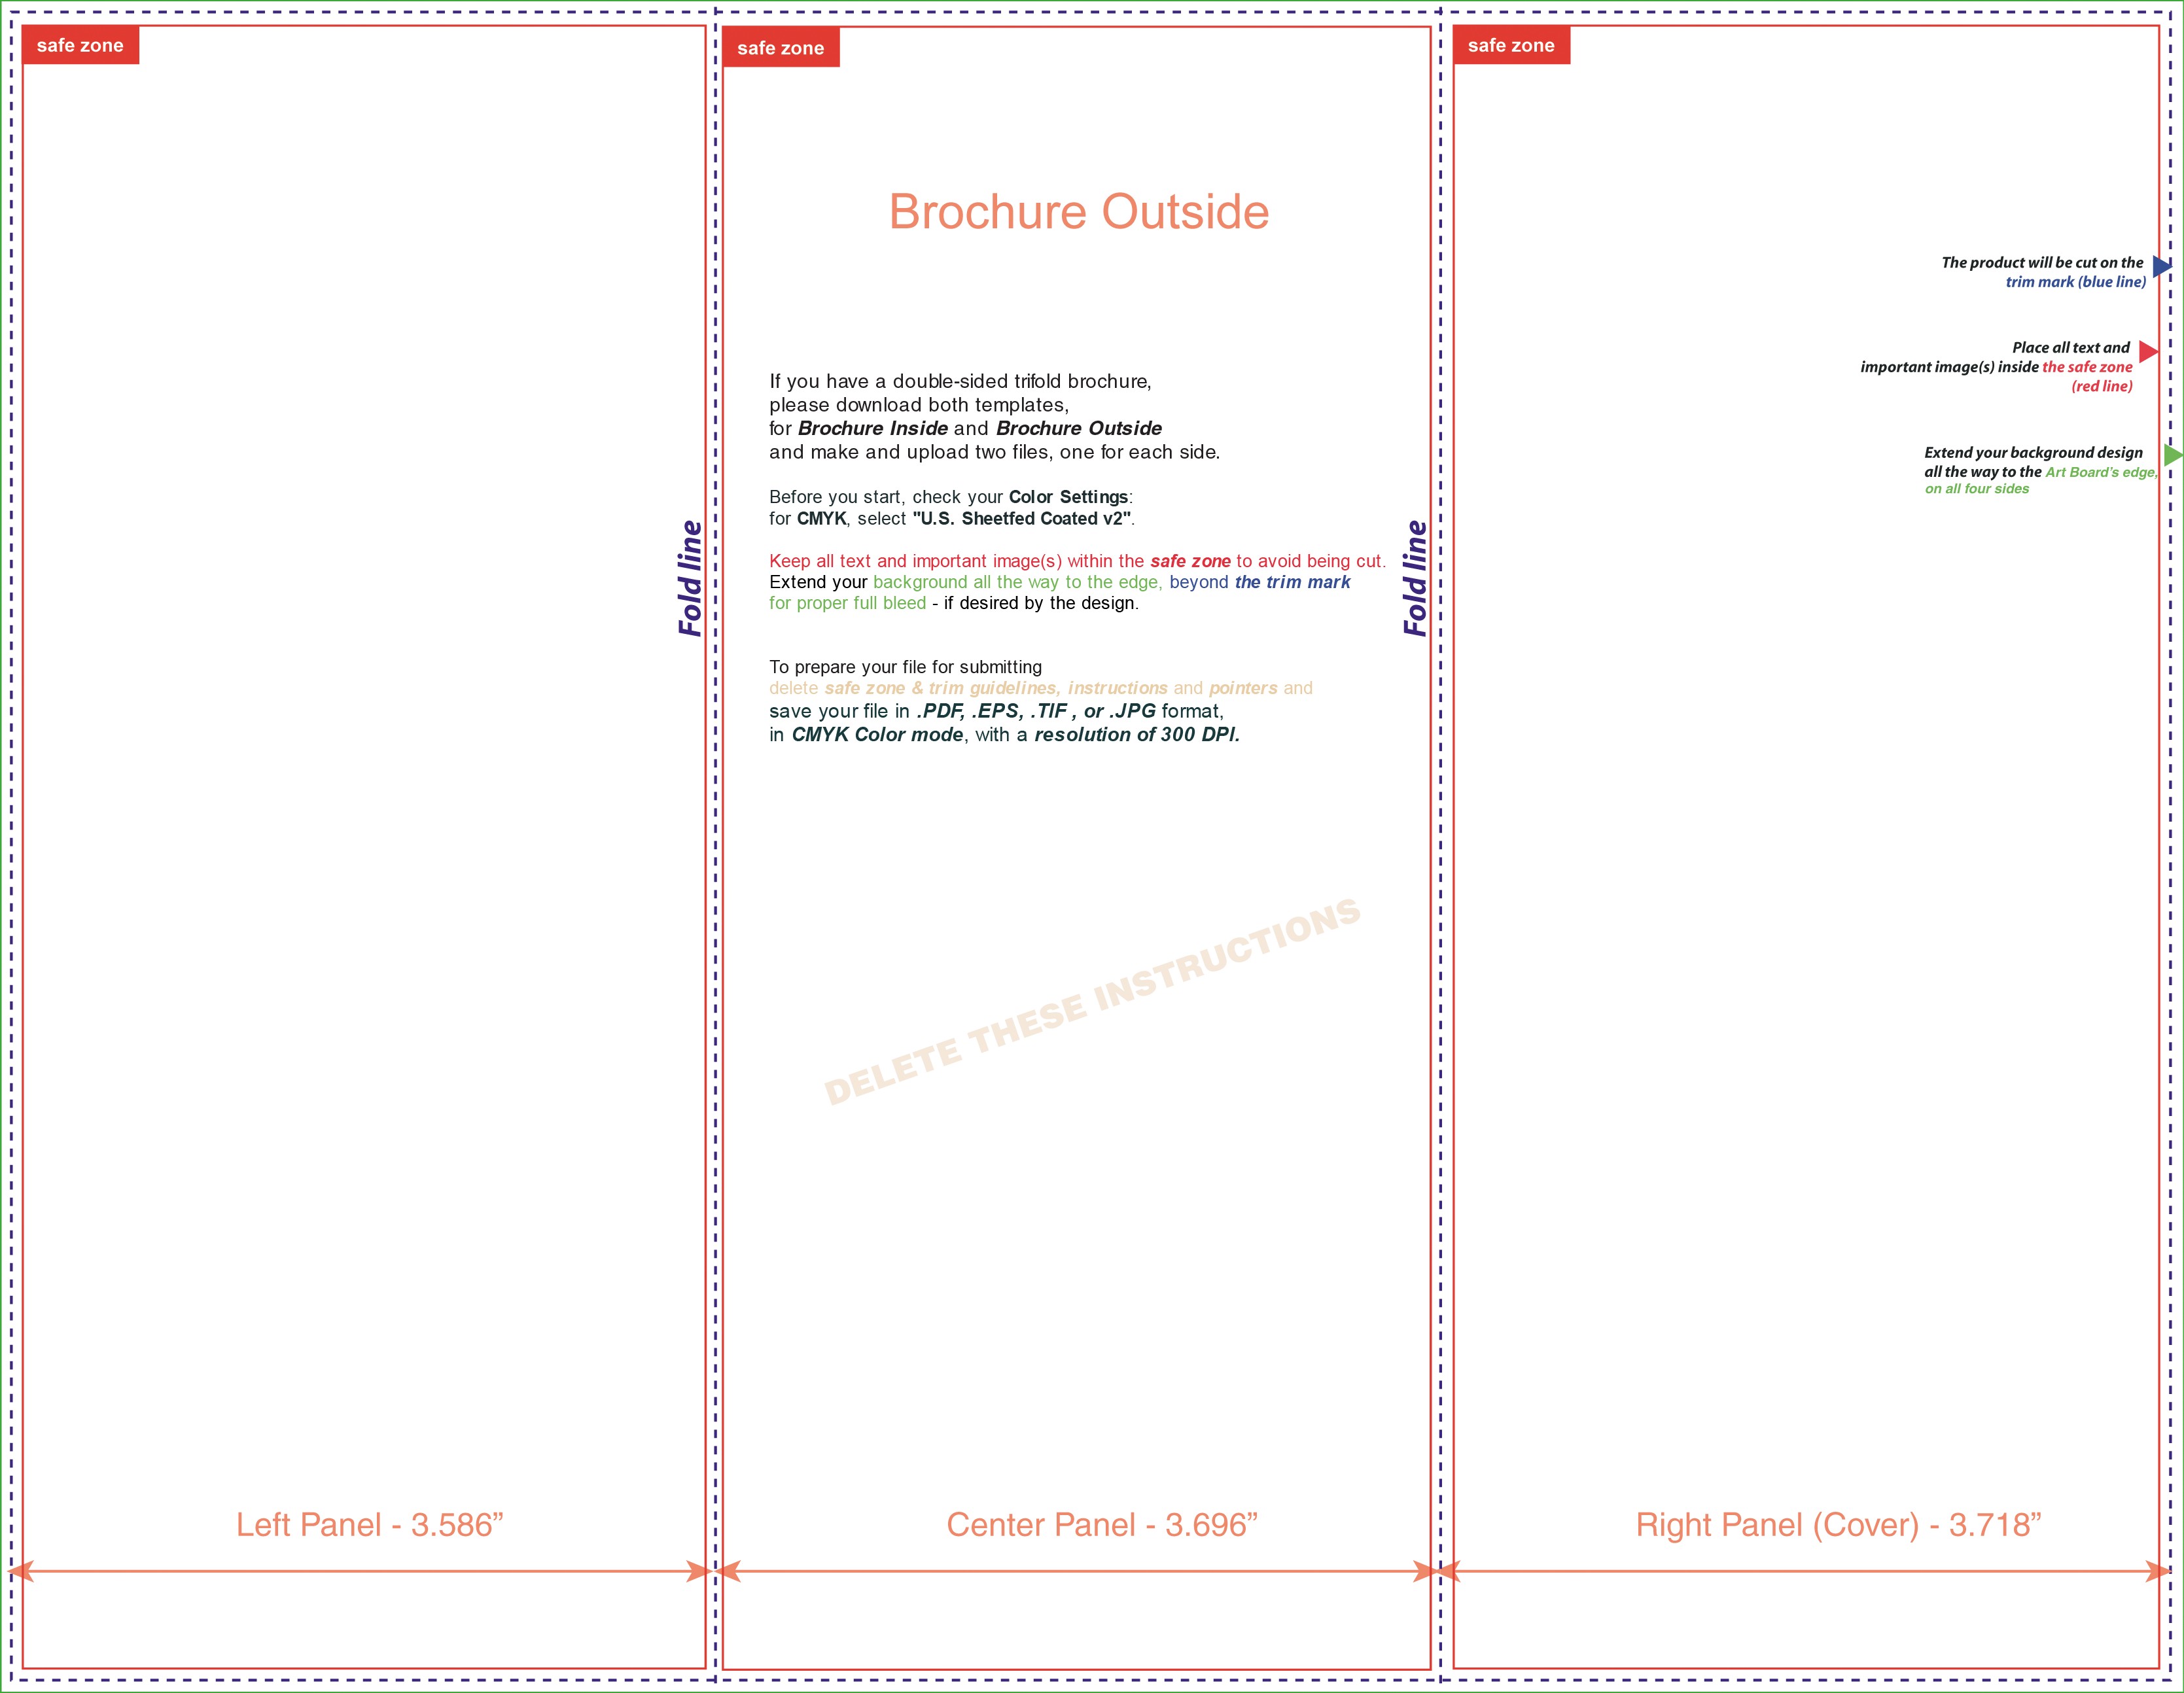 Copyland Print Copy Direct Mail Design Services Web Bookmark Template Illustrator